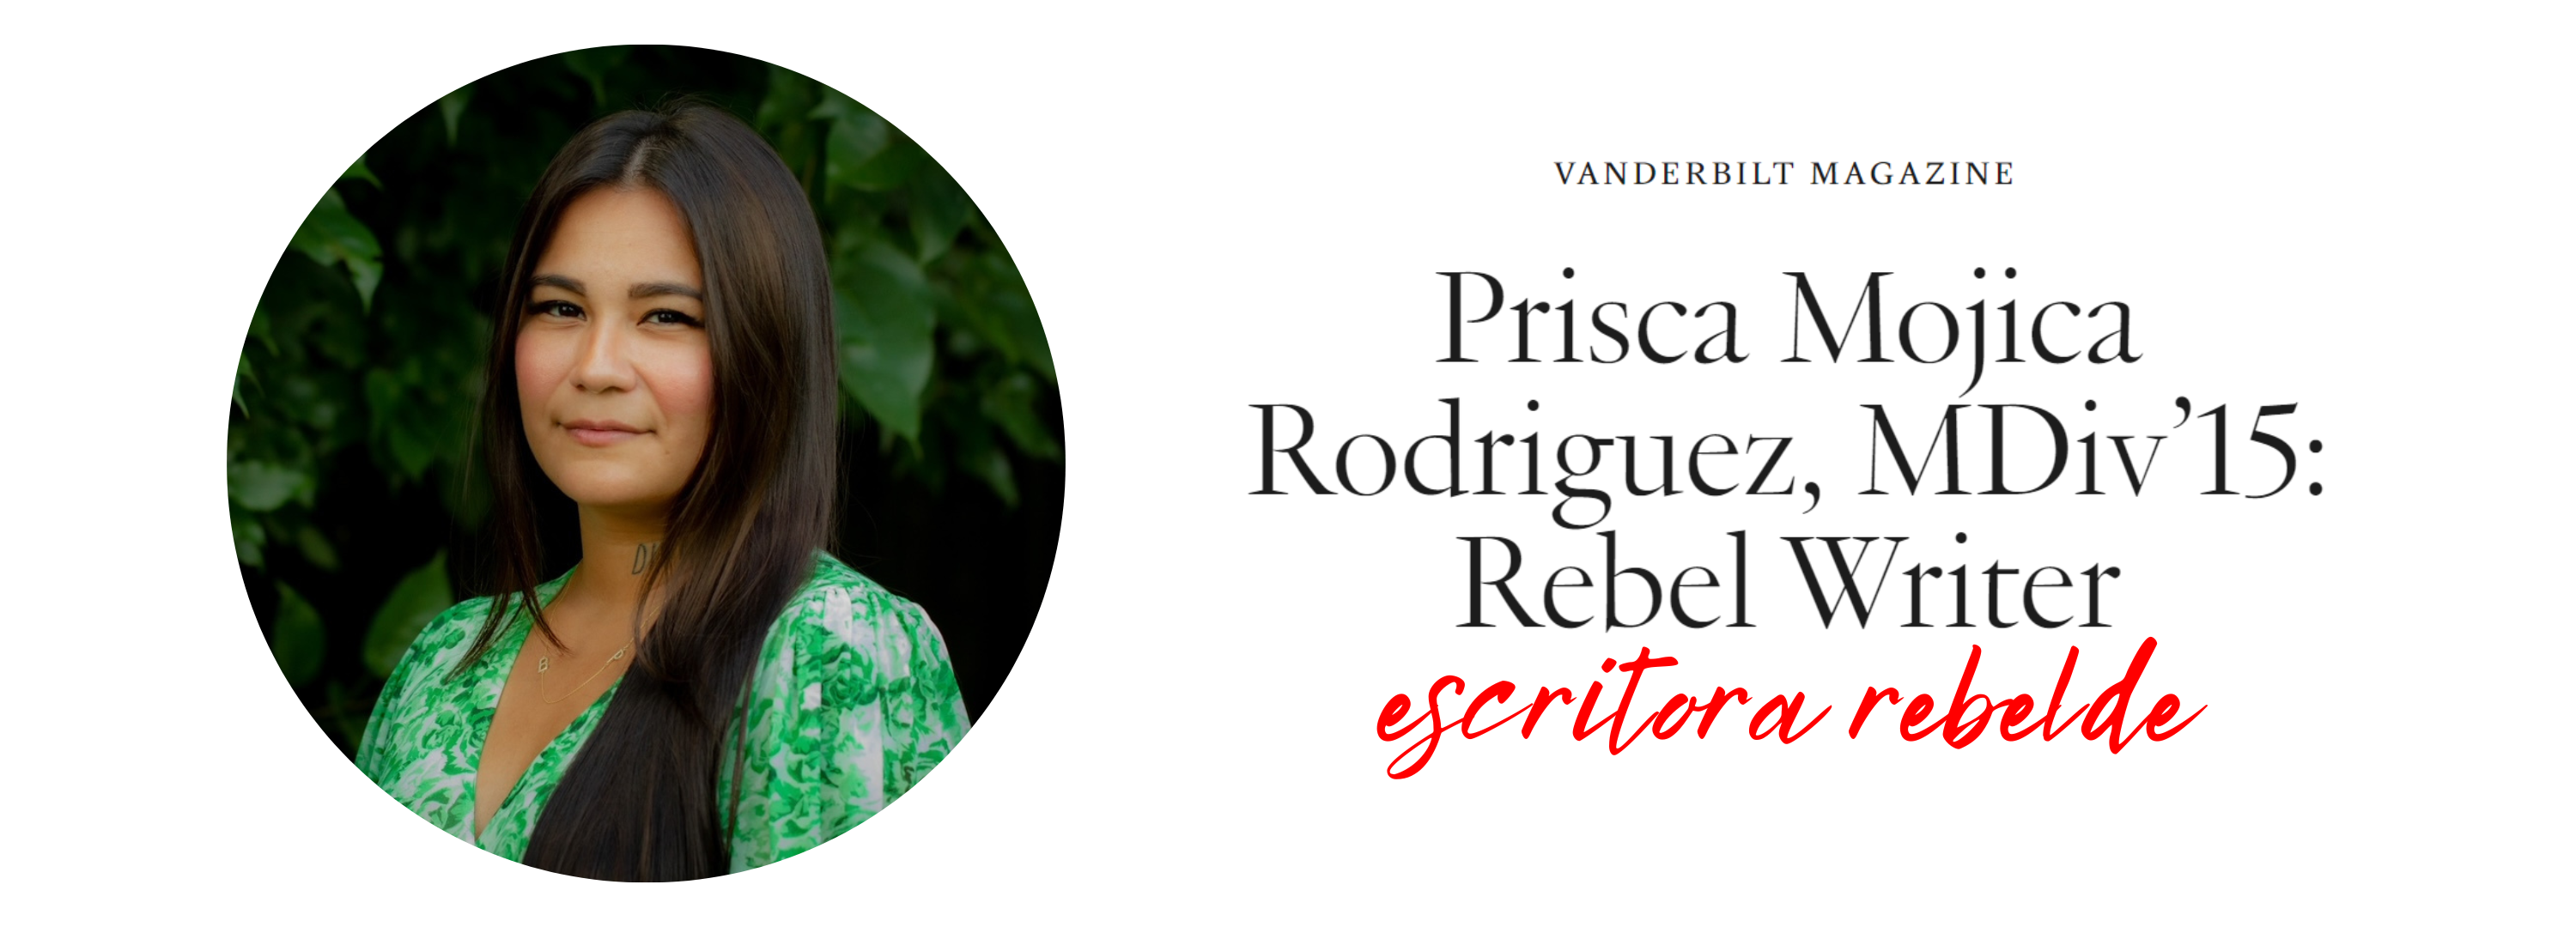 Prisca Mojica Rodriguez, MDiv '15: Rebel Writer